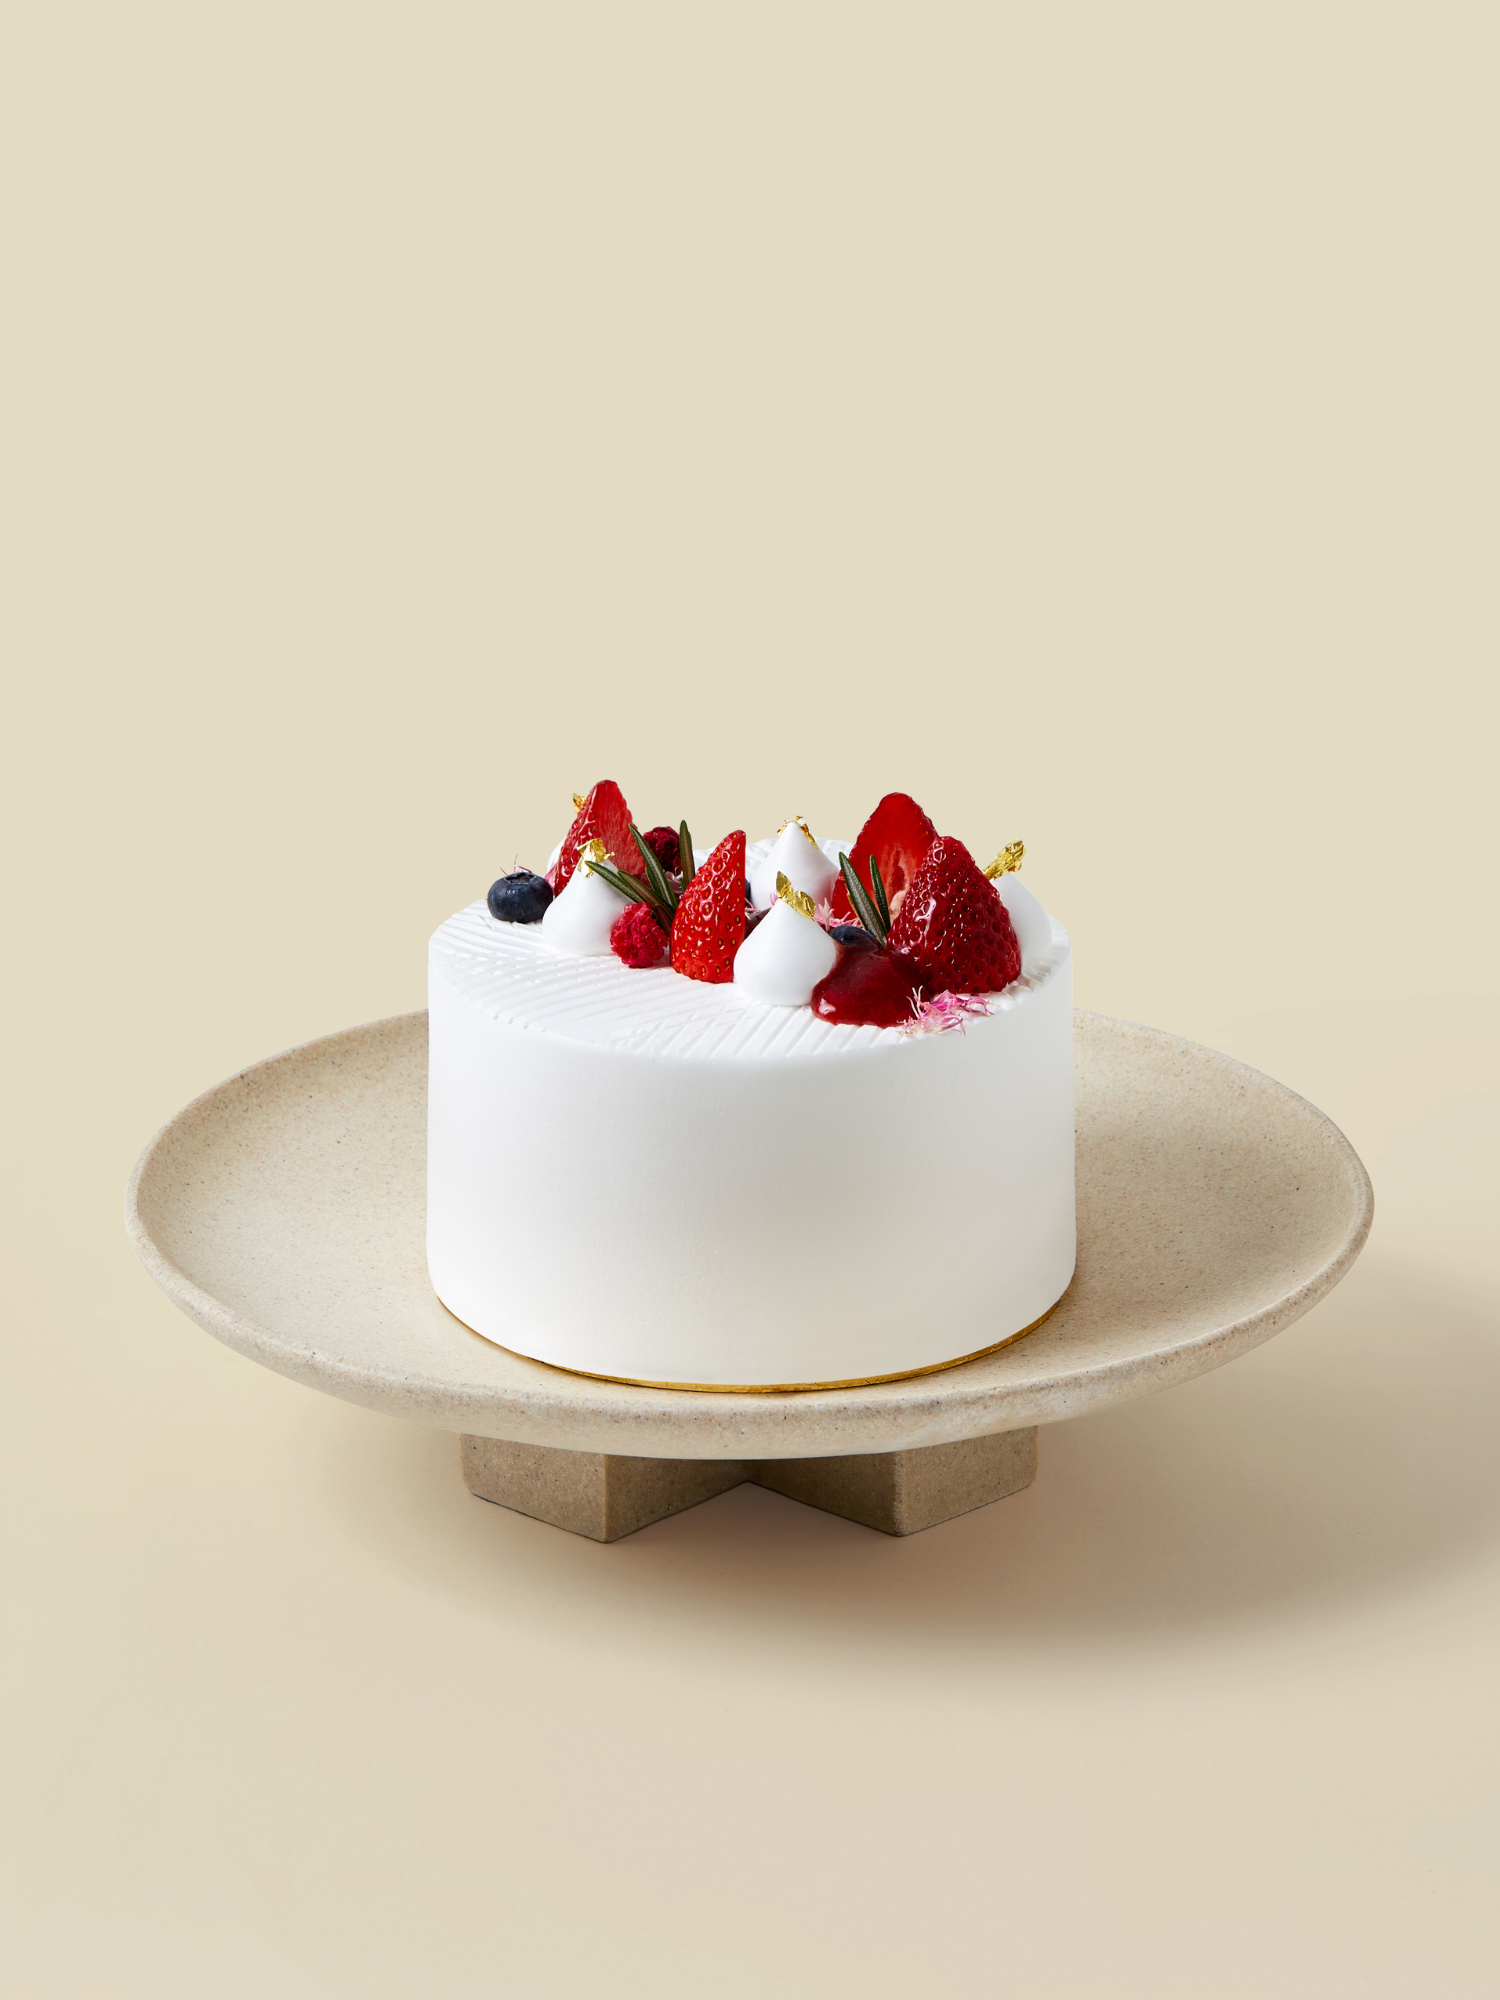 Mixed Berries Sugar-Free Cake | Fieldnotes Singapore